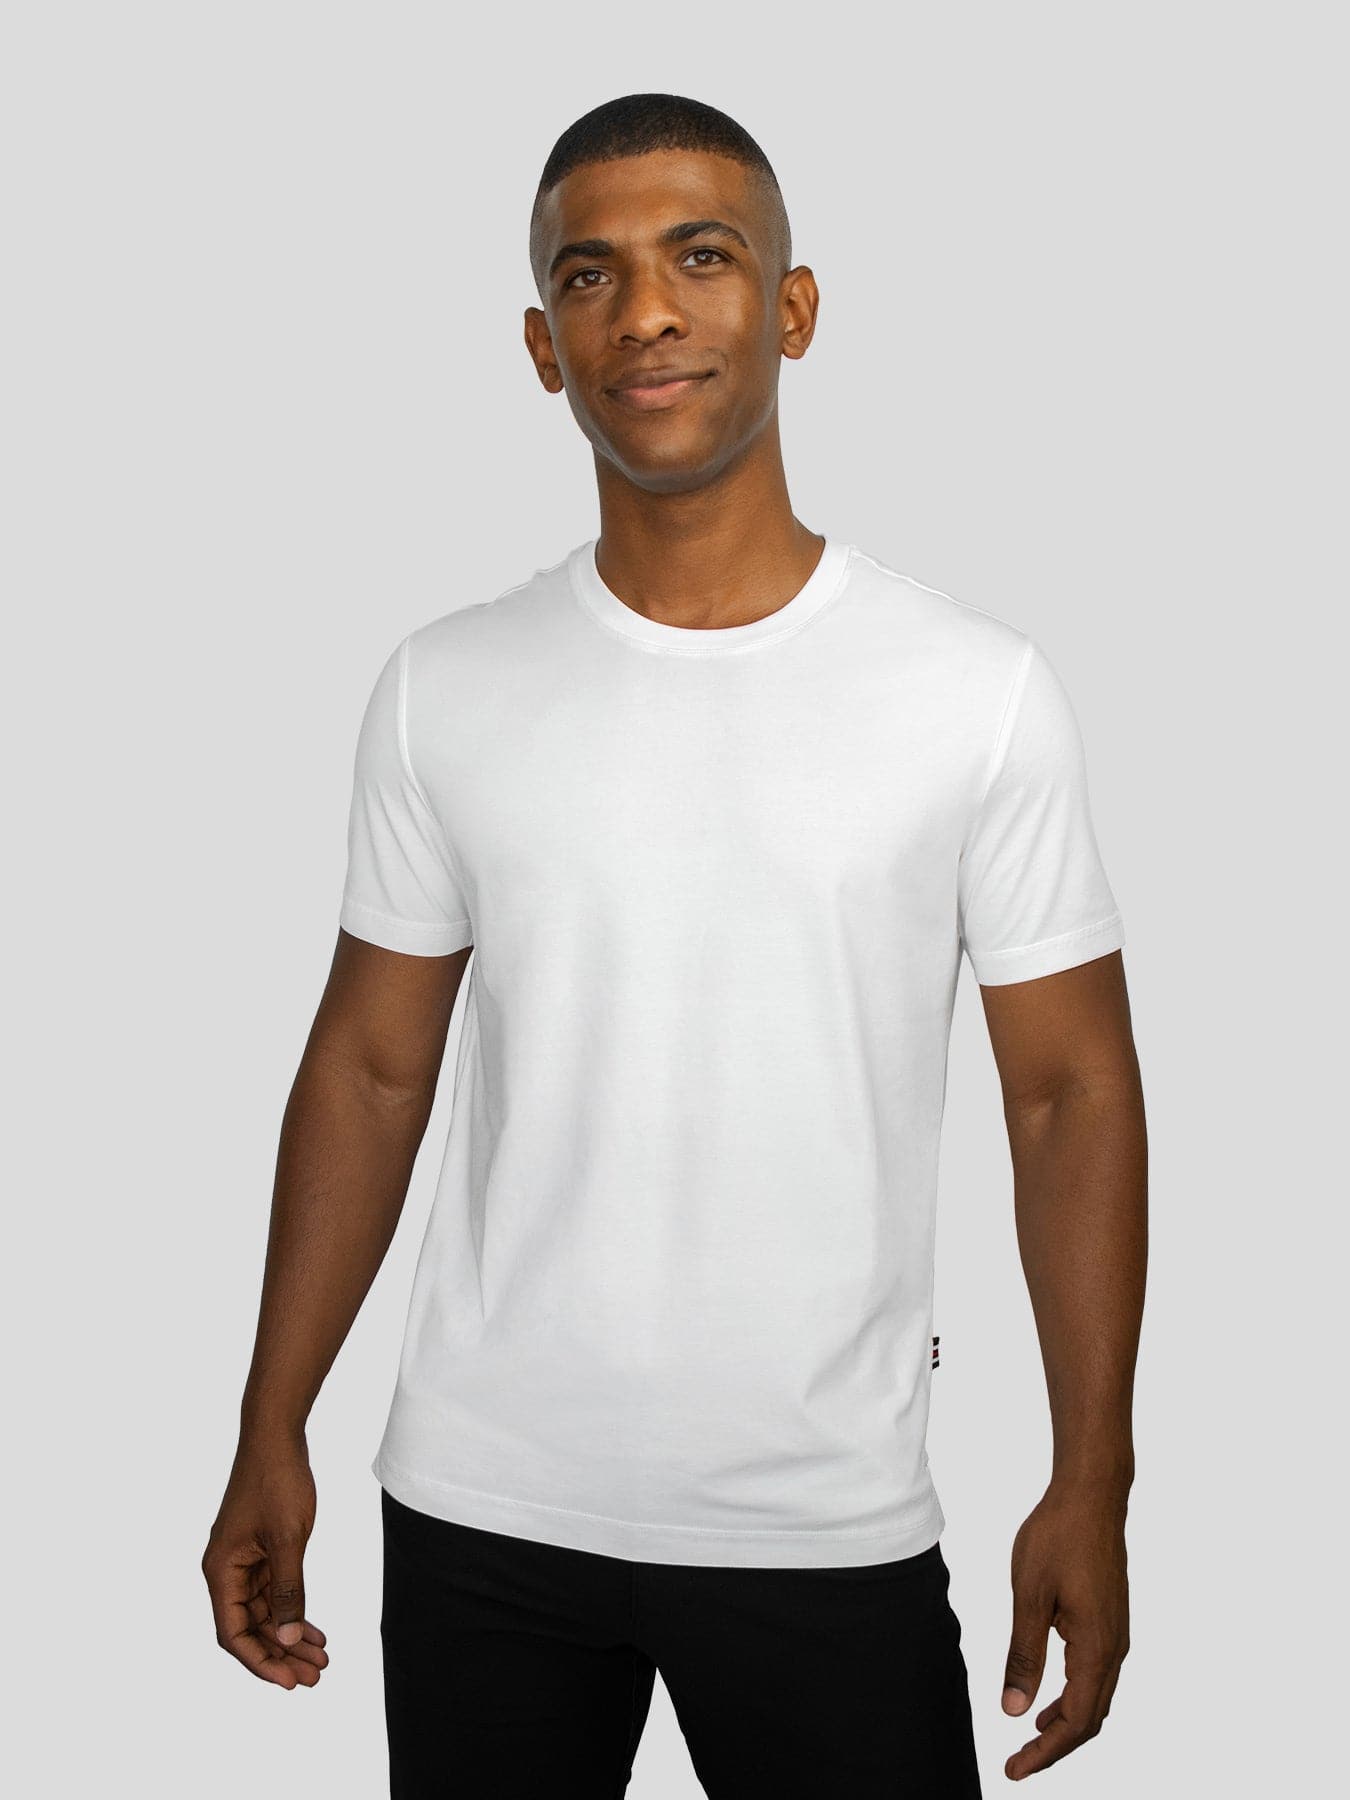 StayCool 2.0 Slim Fit T-Shirt mit geteiltem Saum